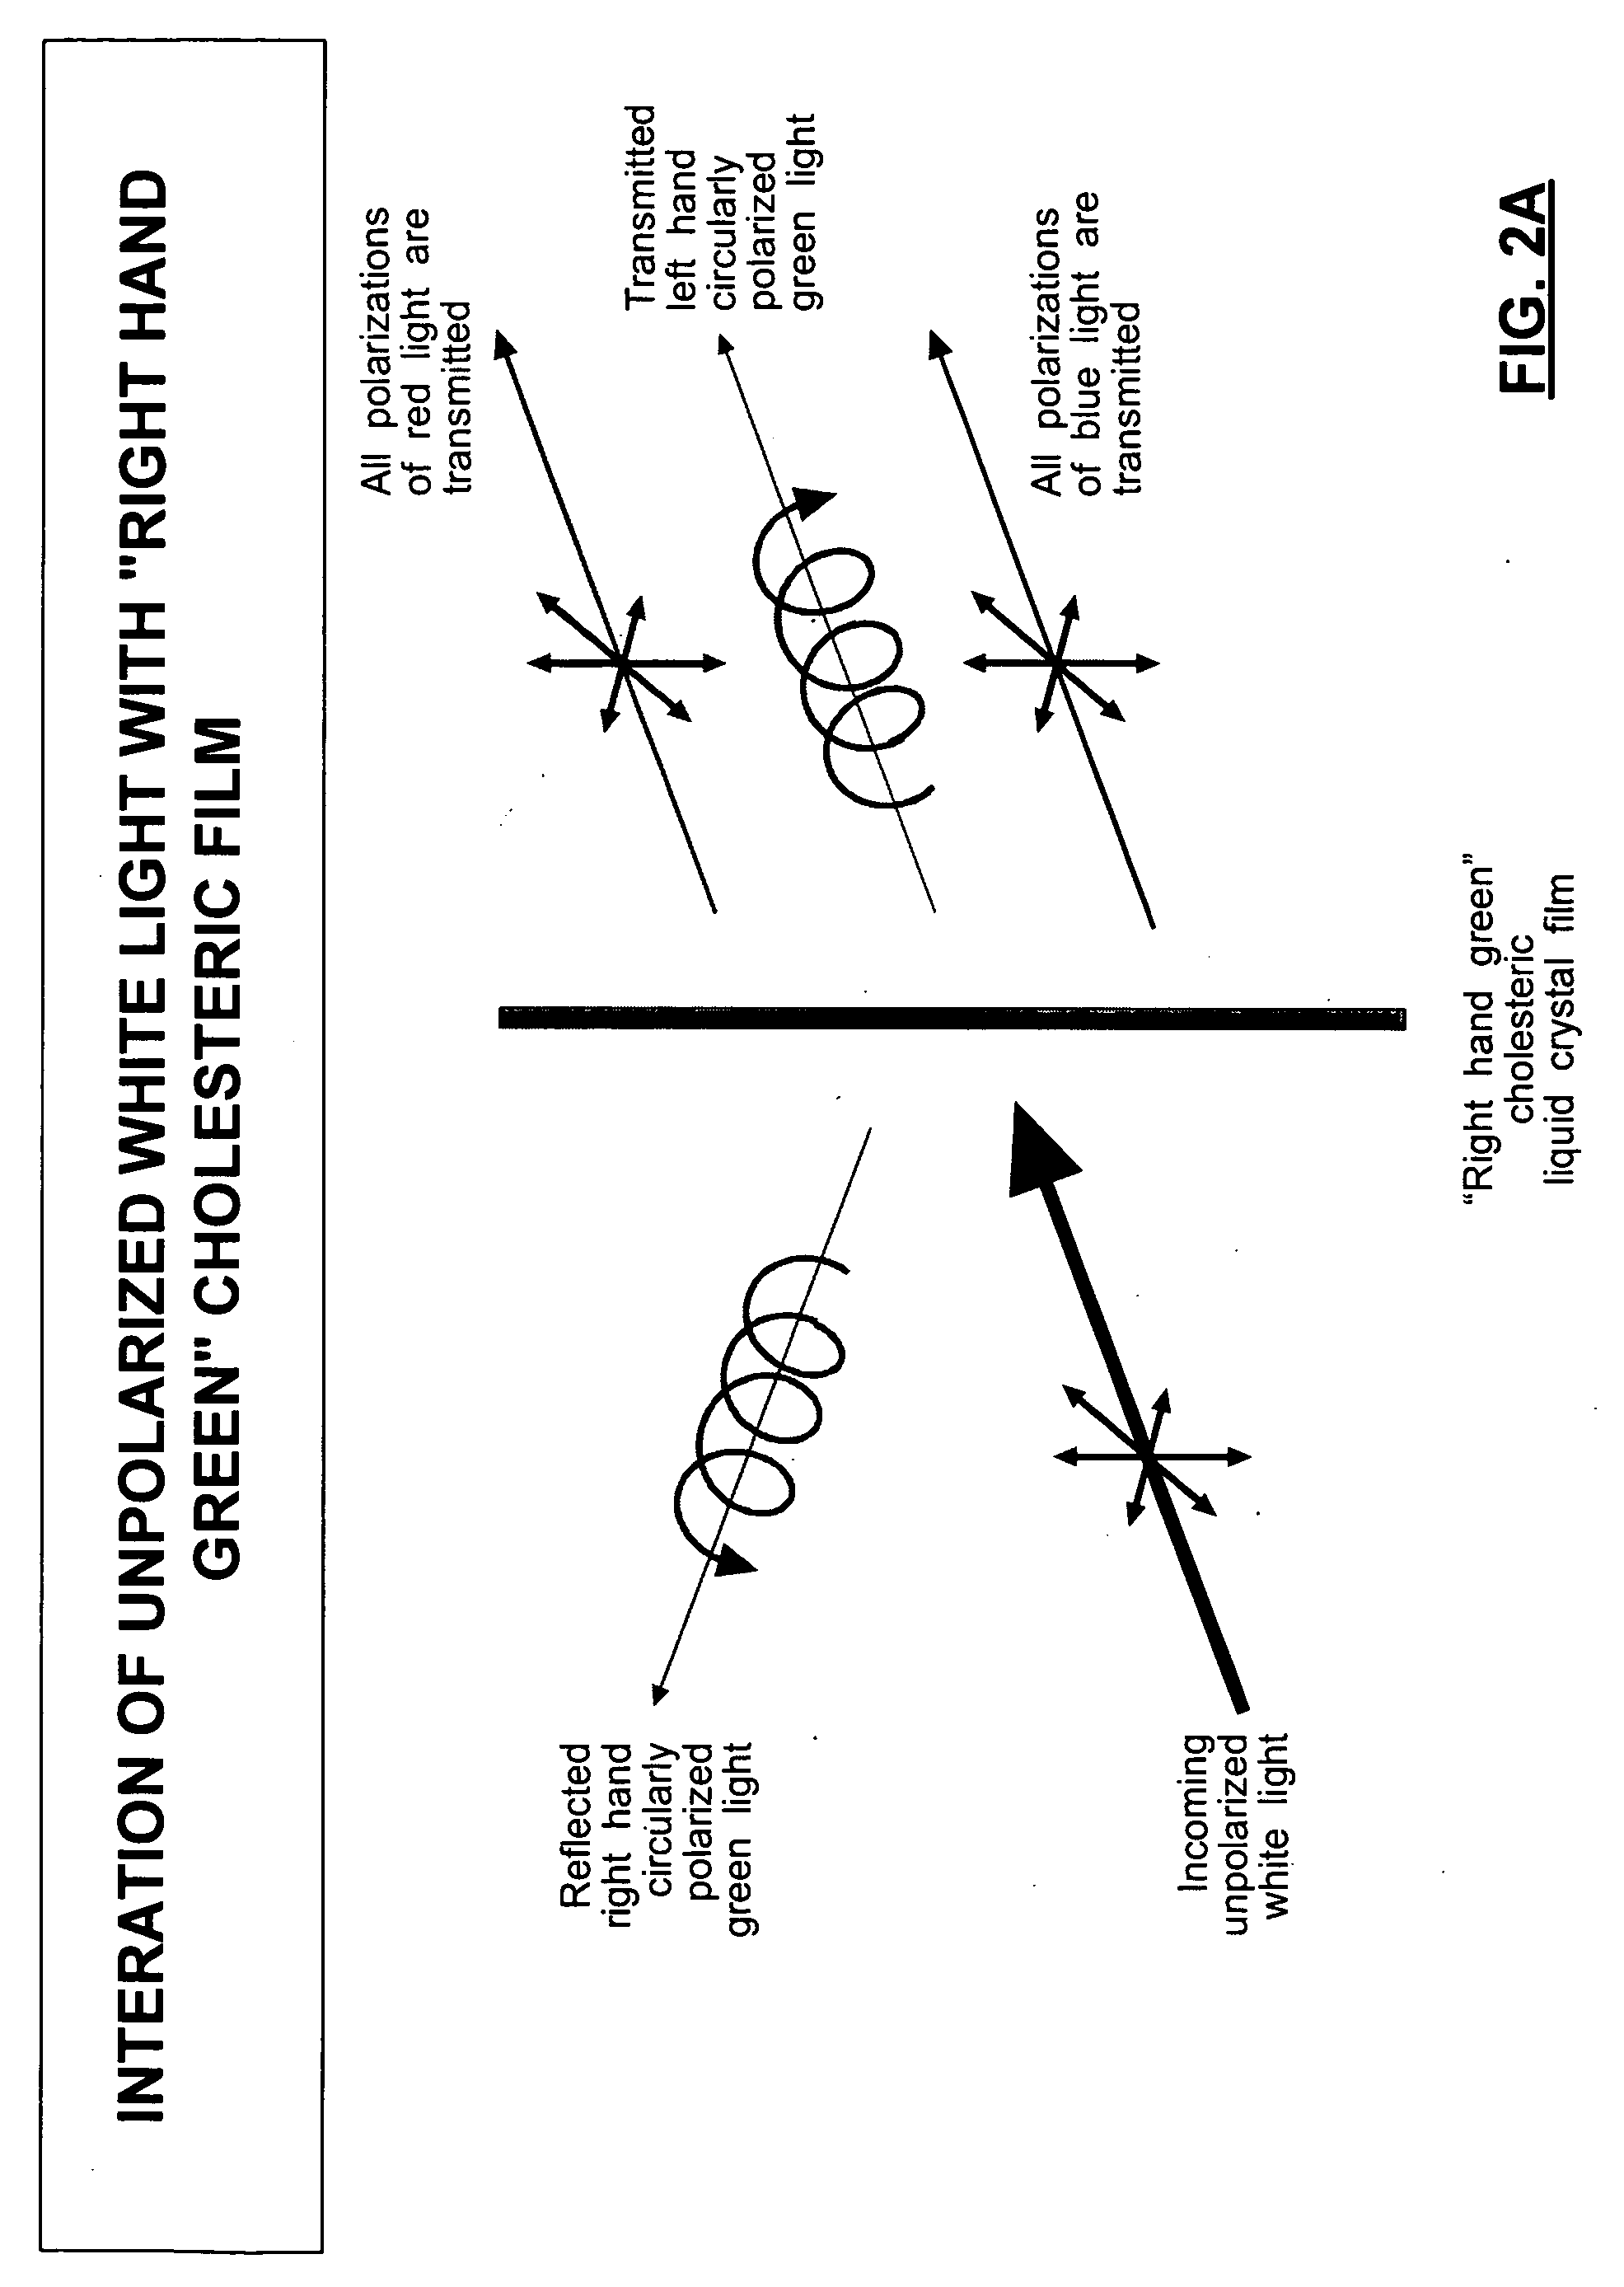 Advanced prism assemblies and prism assemblies using cholesteric reflectors